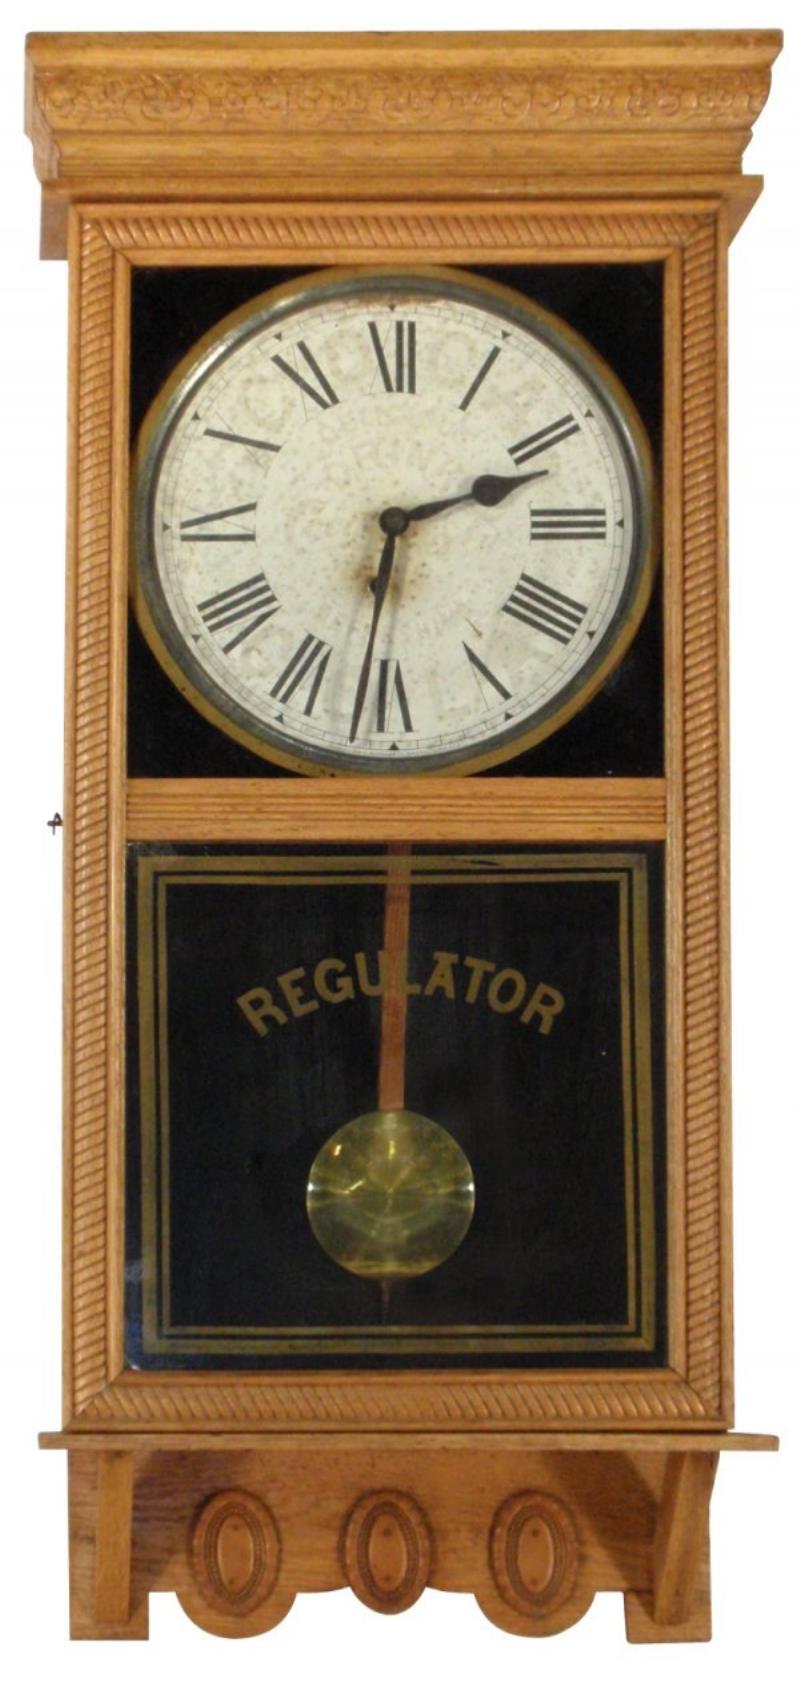 Coca-Cola regulator clock by The Ingraham Co., fa